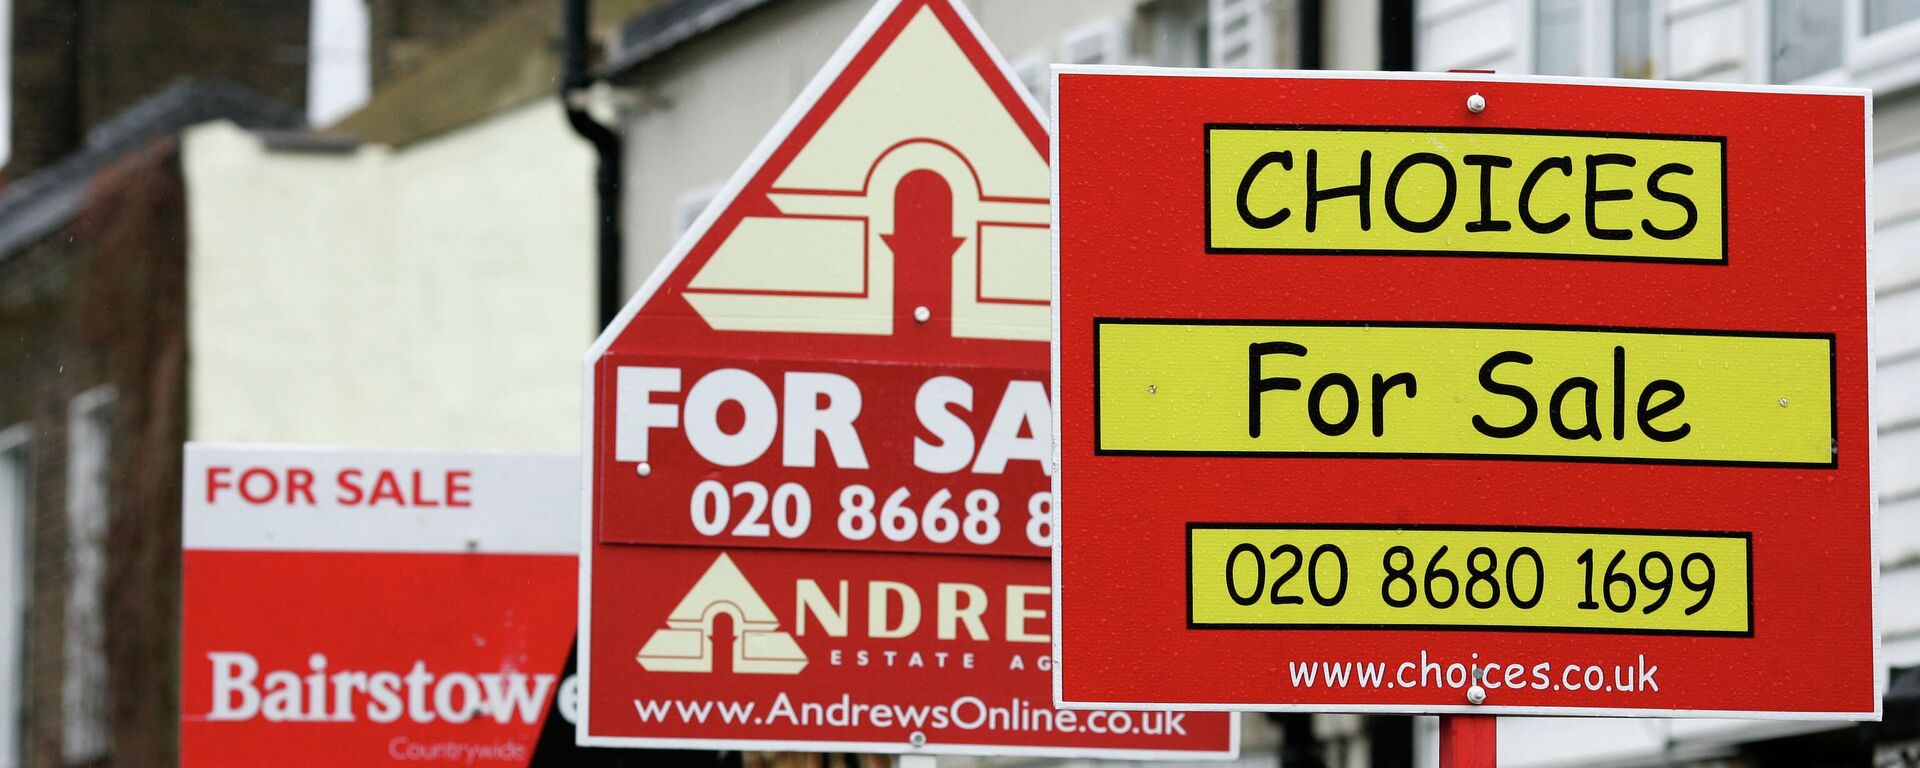 Property for sale signs are seen on a street in Croydon, south London - Sputnik International, 1920, 03.10.2022